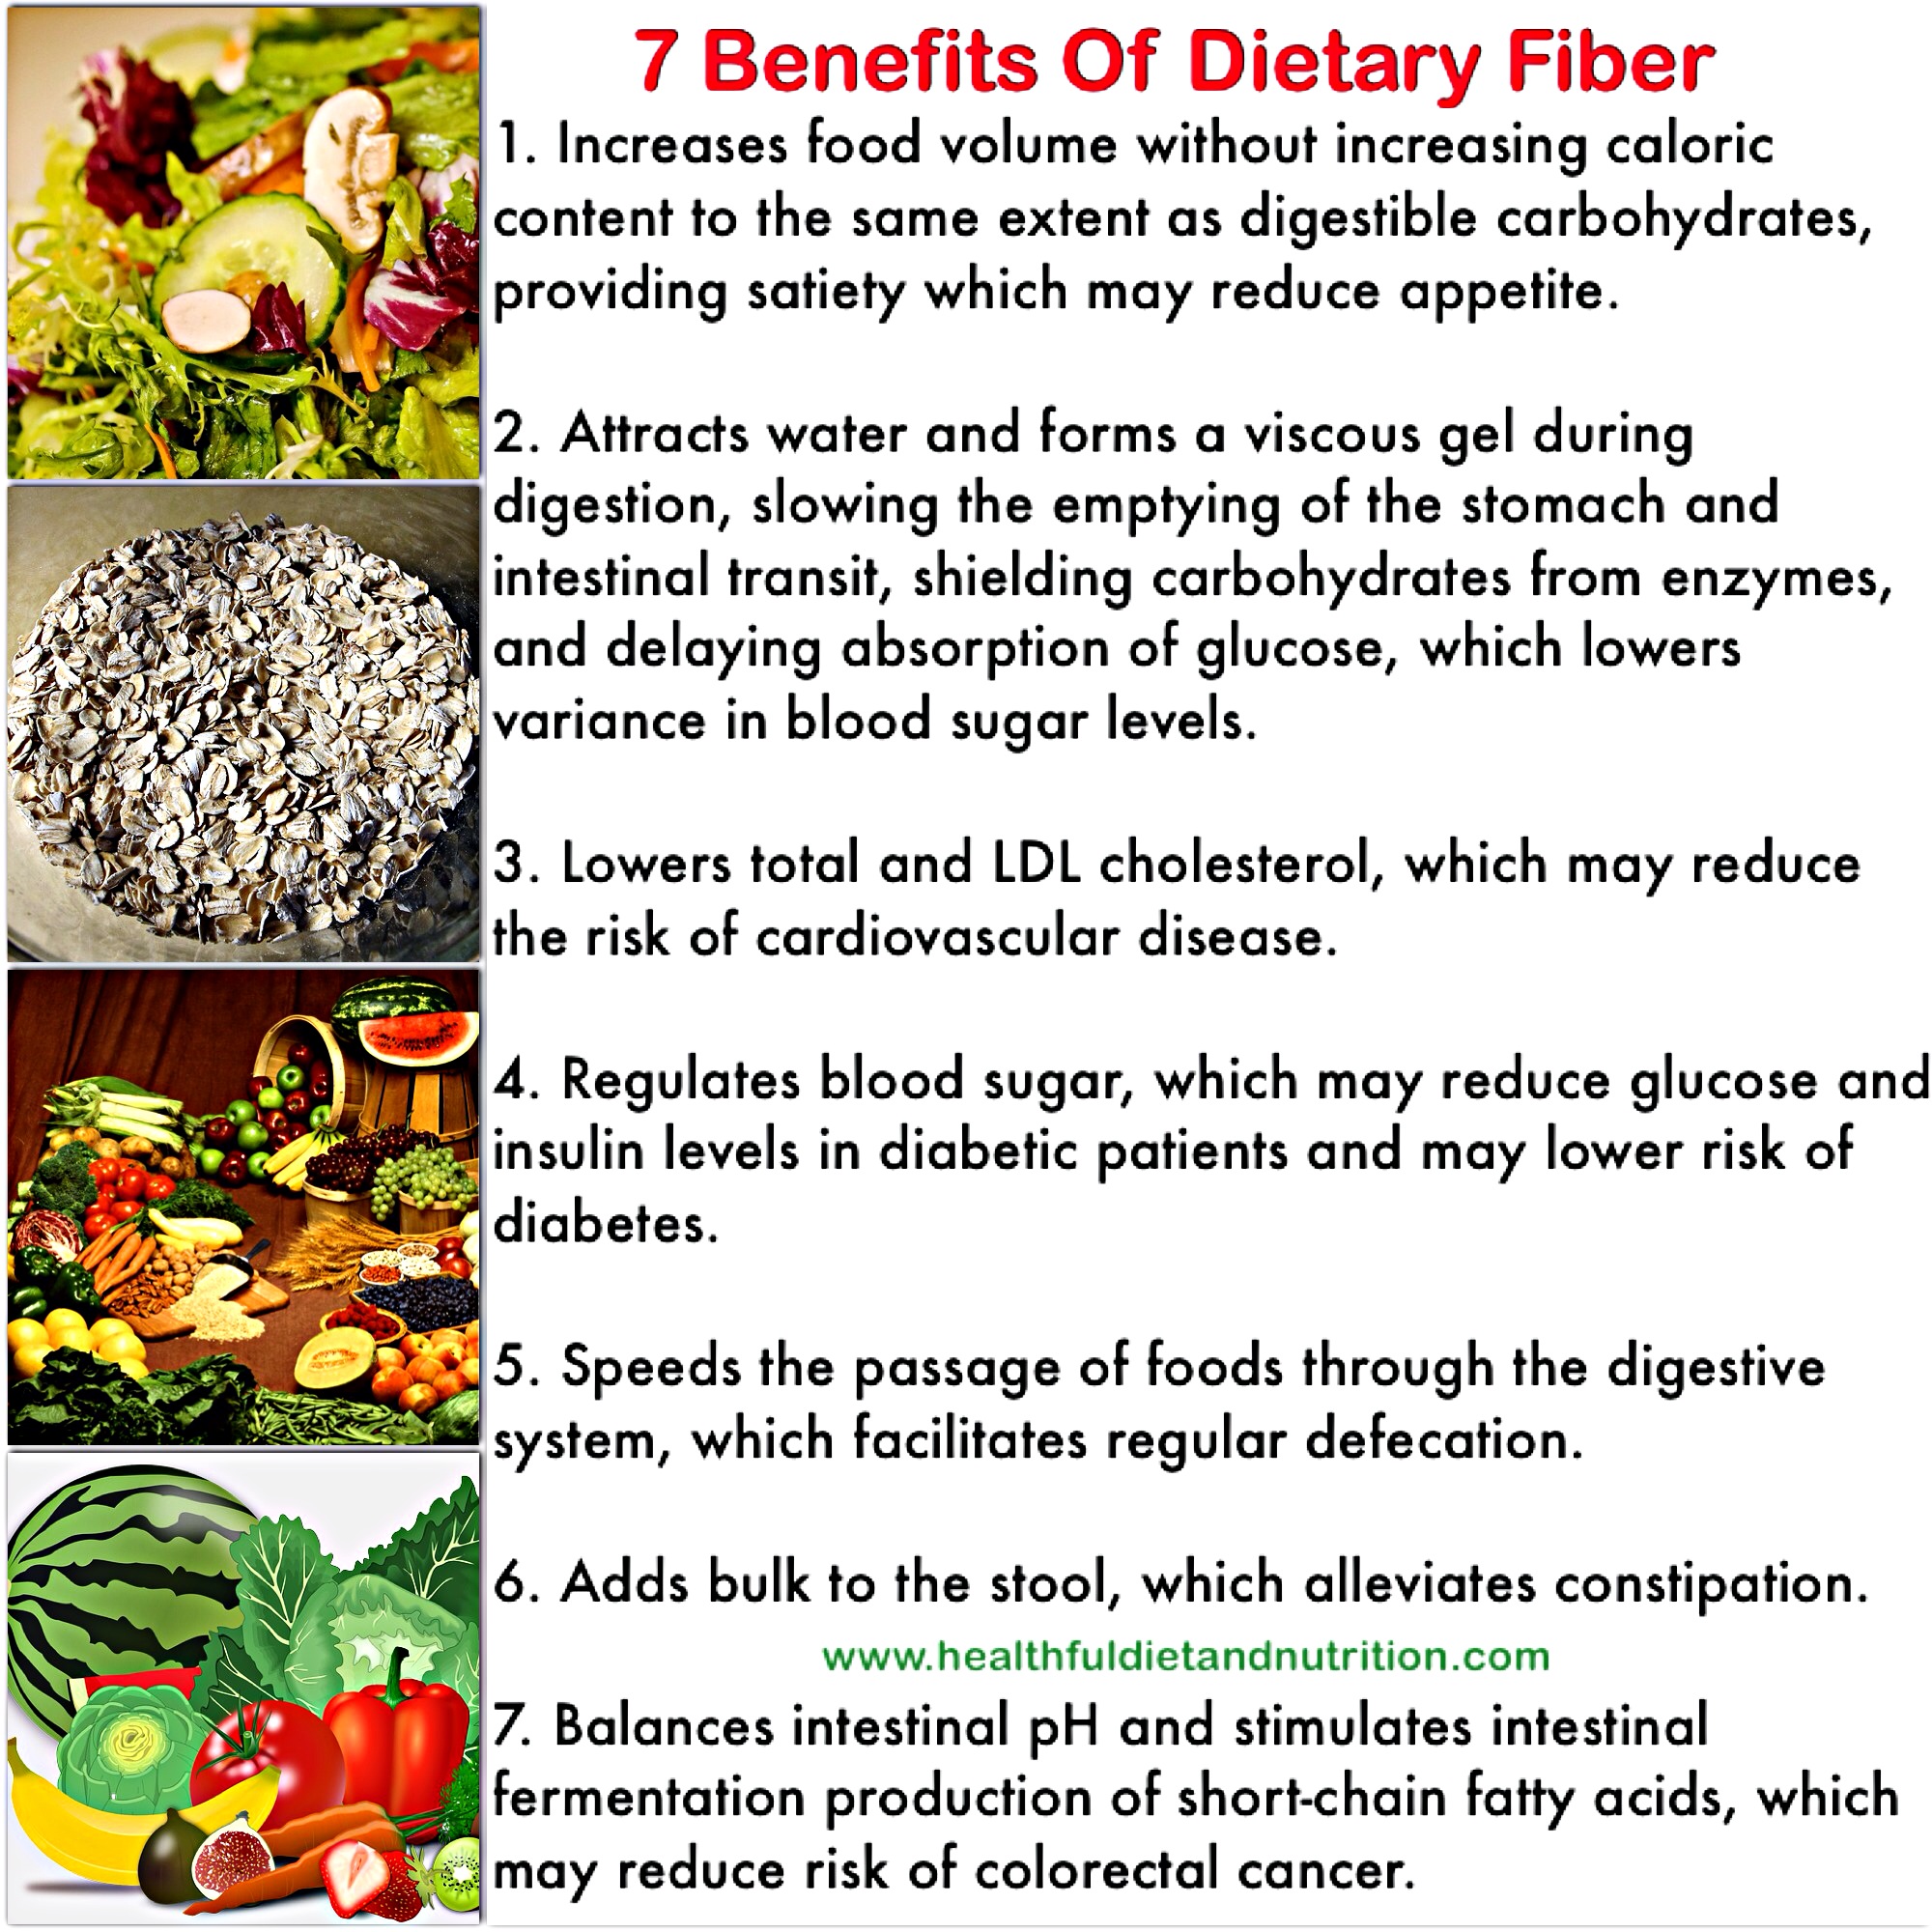 7 Benefits of Dietary Fiber